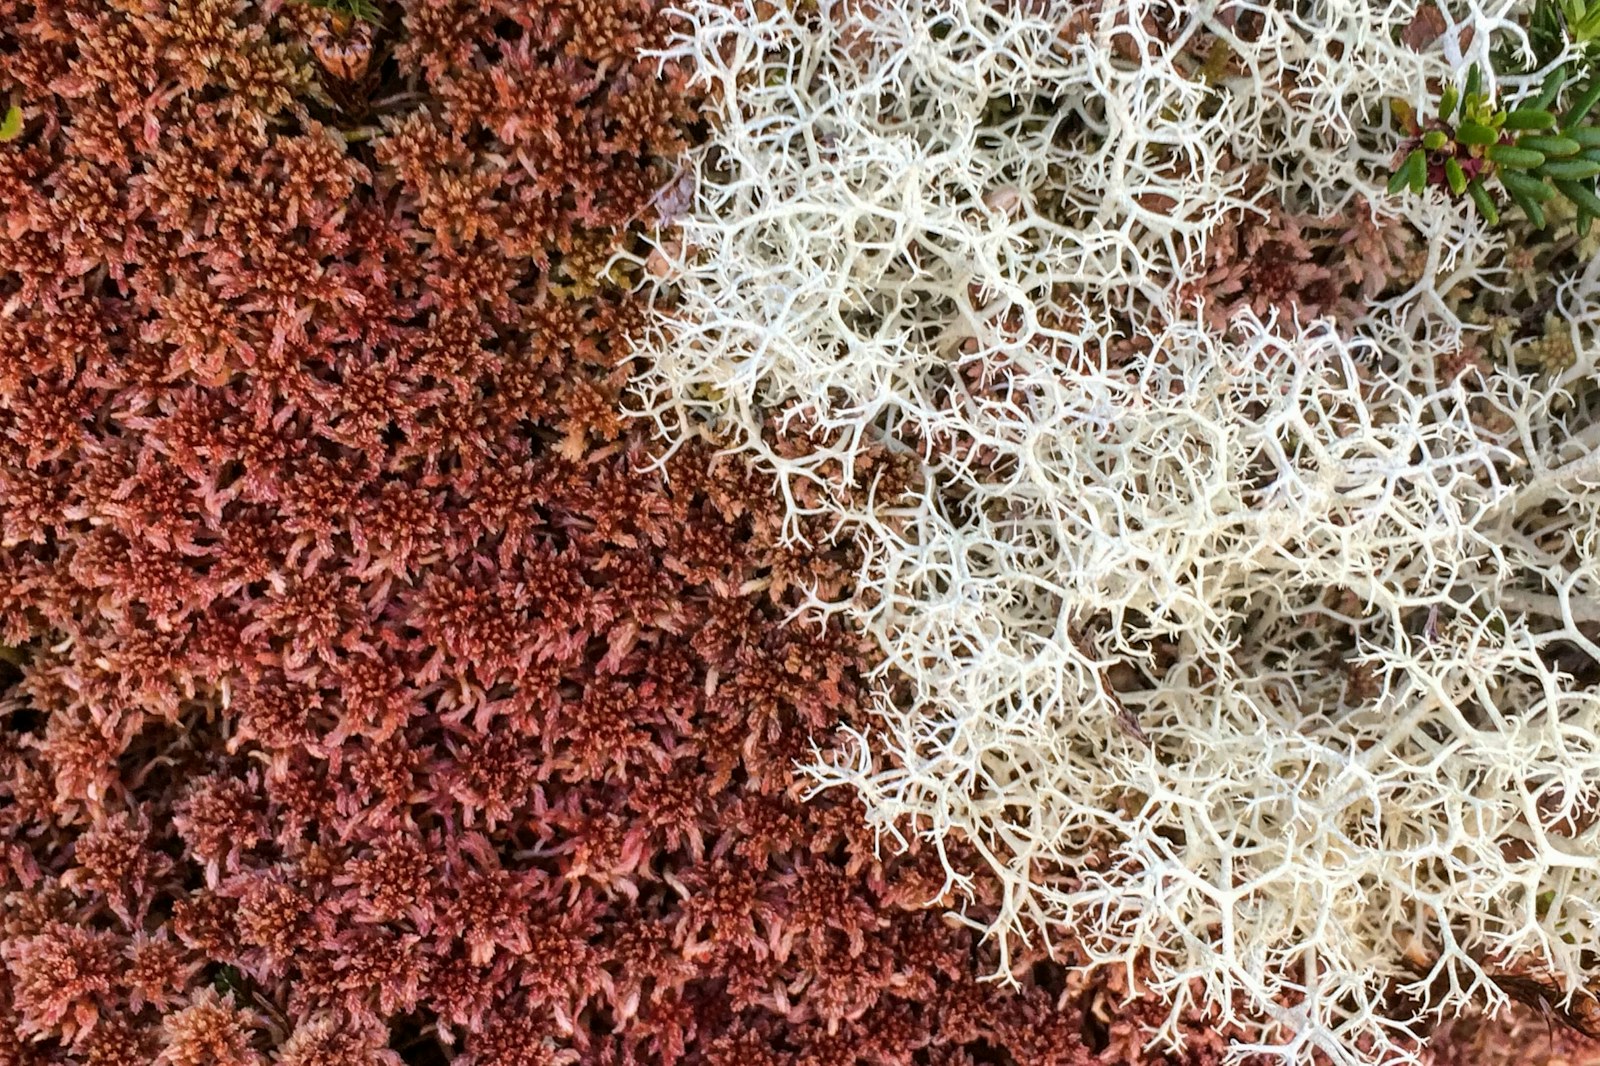 Lichen and moss